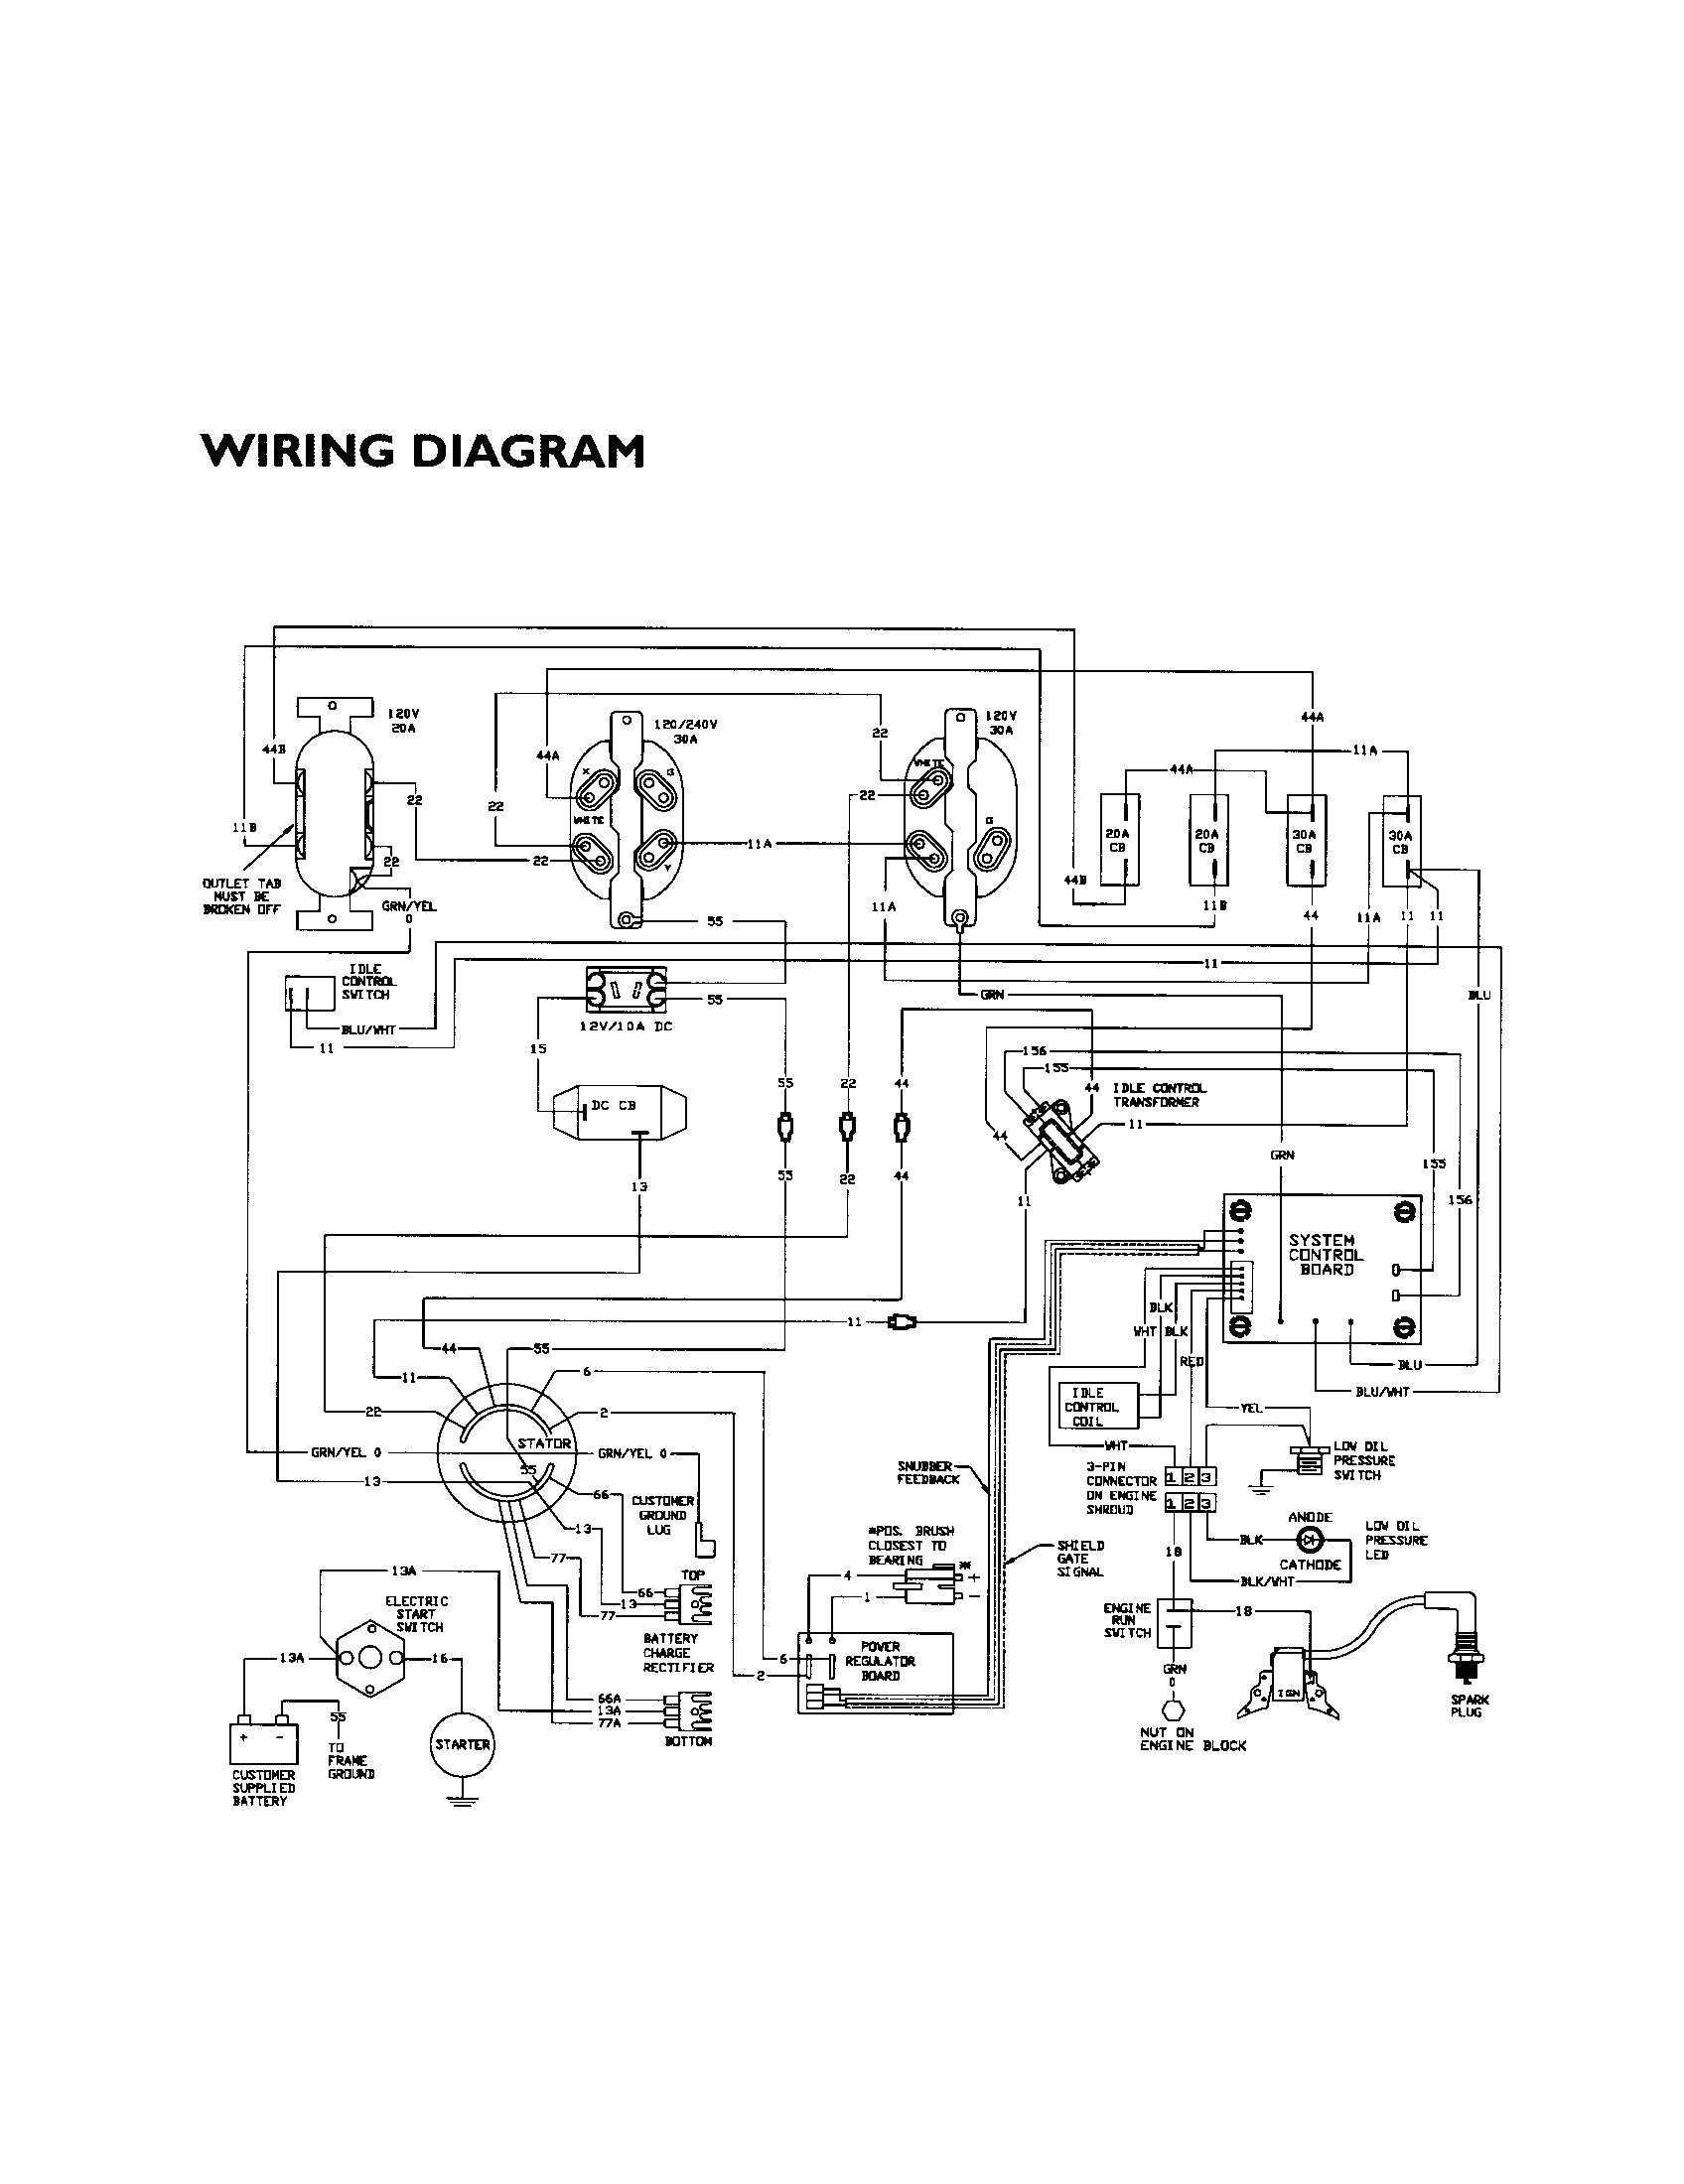 generac generator wiring diagrams schema wiring diagram generac 30 kw wiring diagram